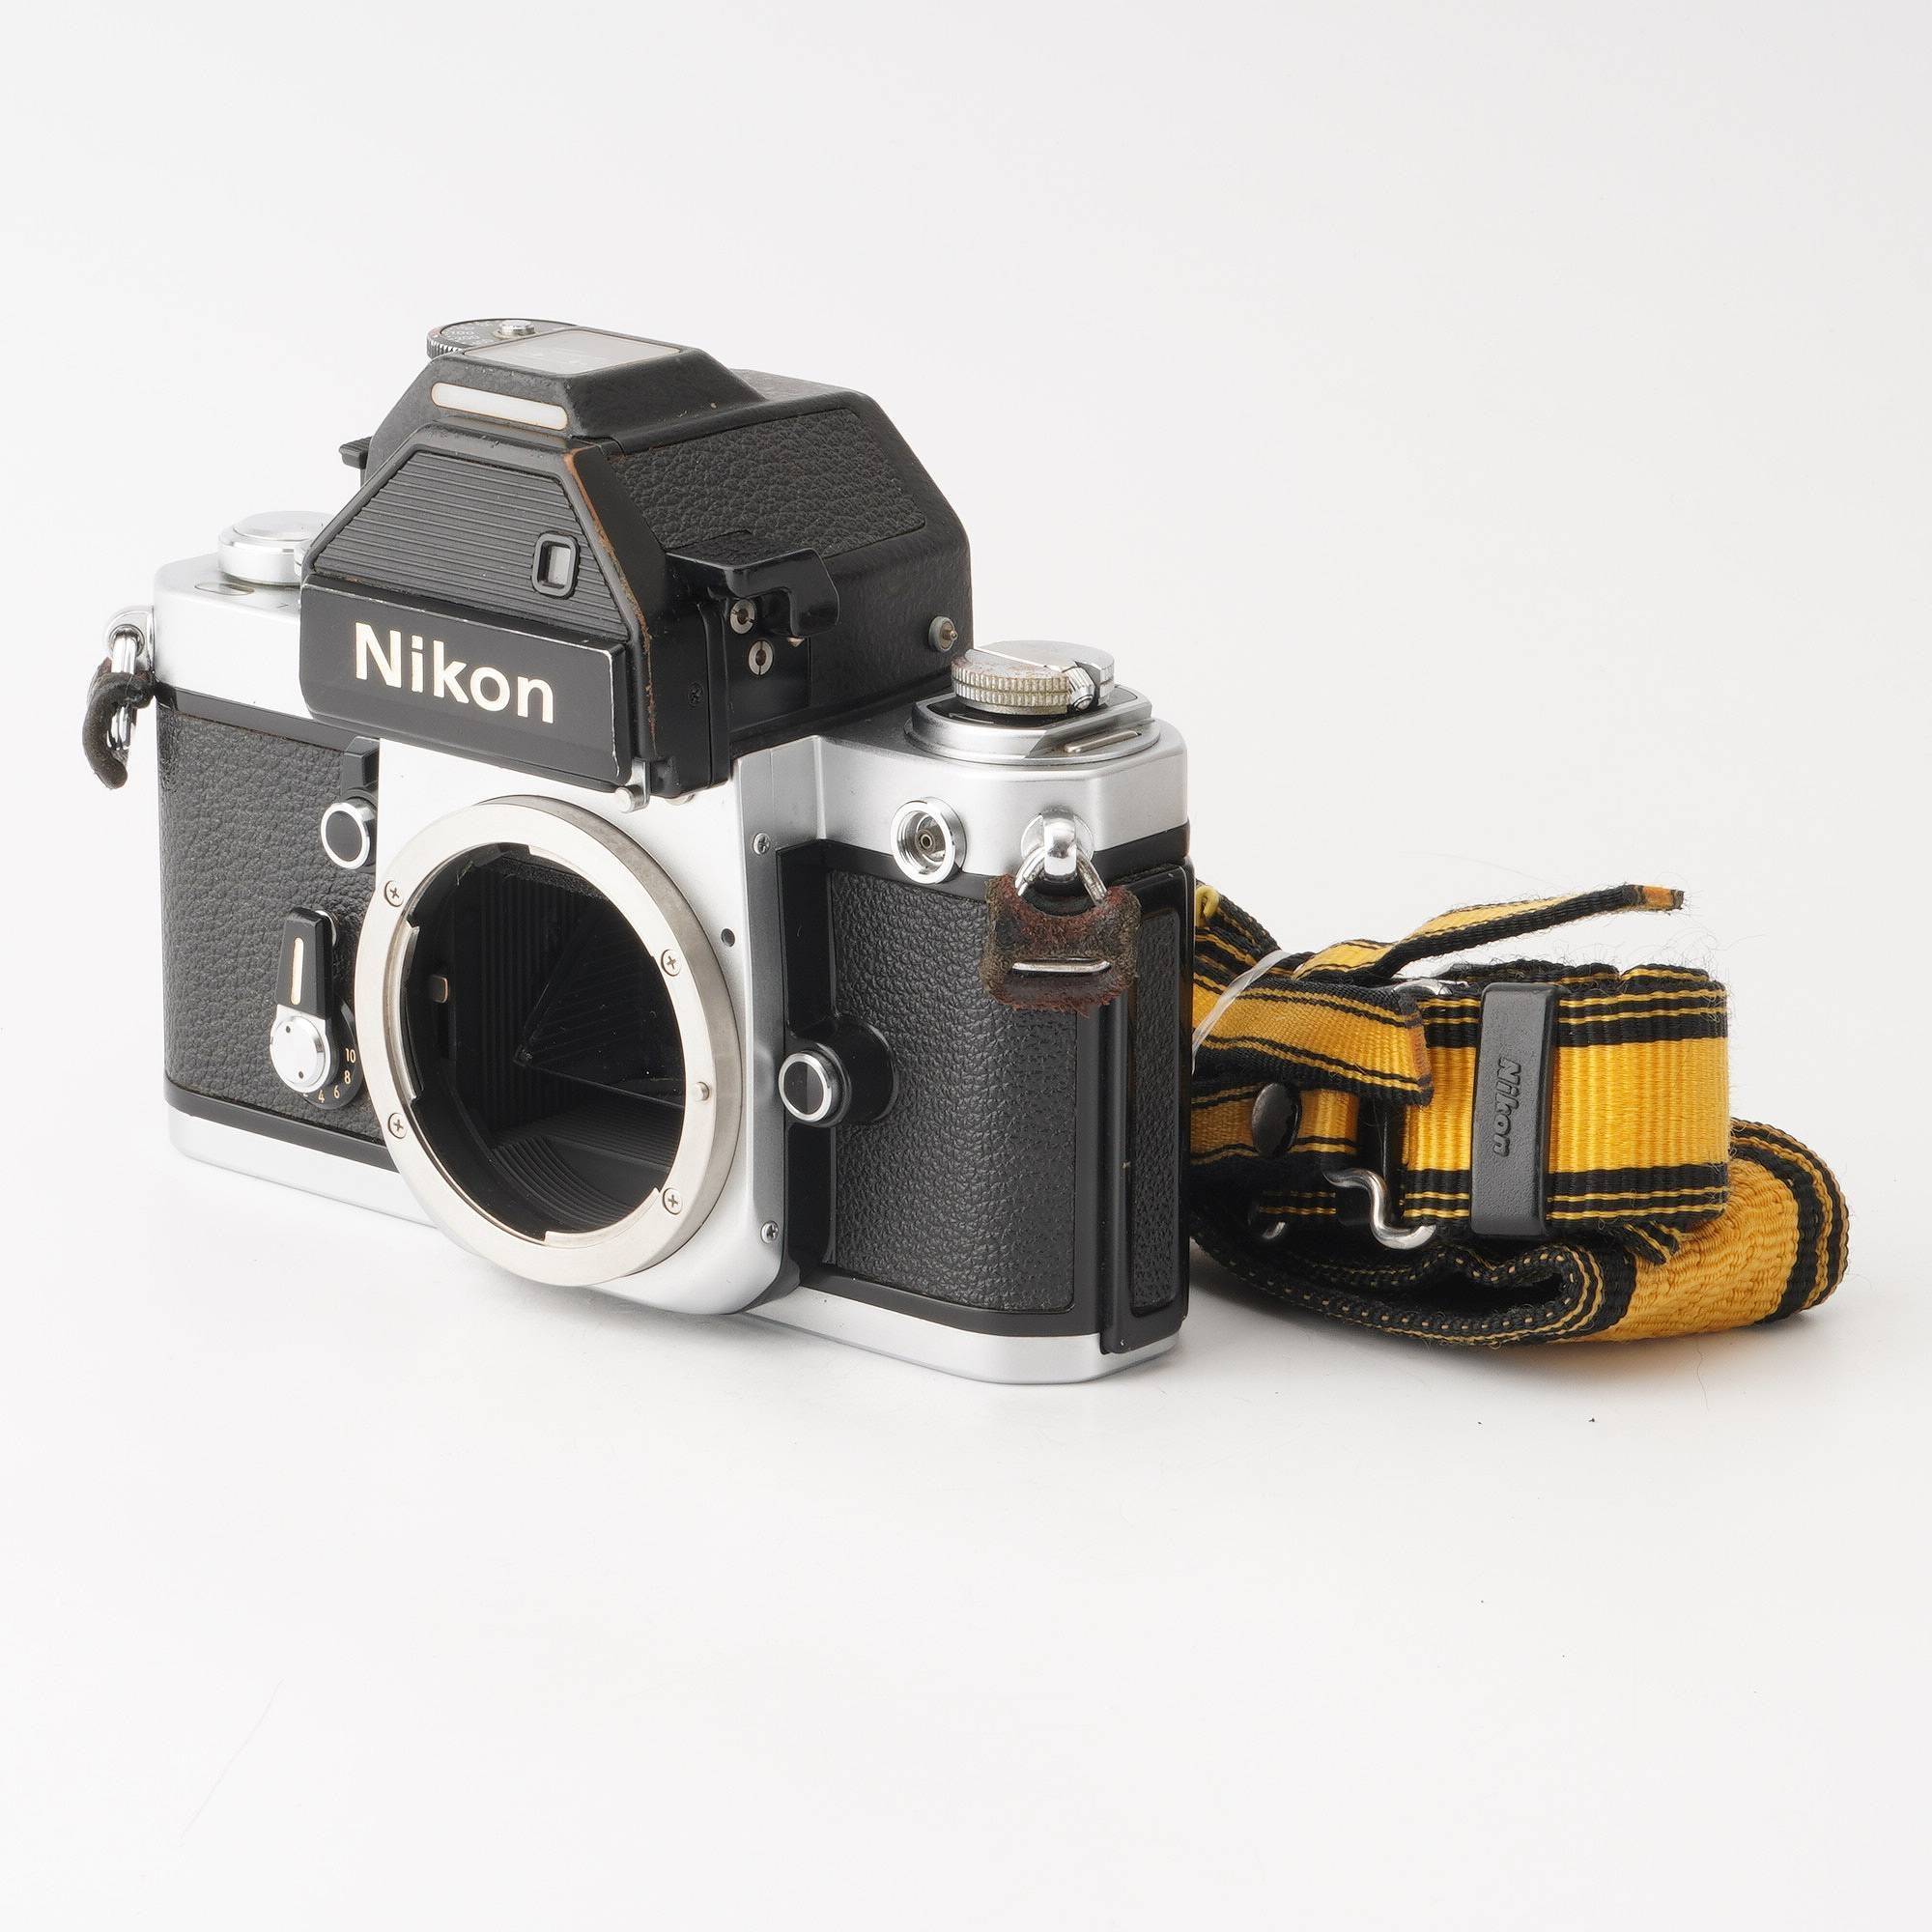 Nikon F2 フォトミック DP-1 シルバーボディ ニコン - フィルムカメラ